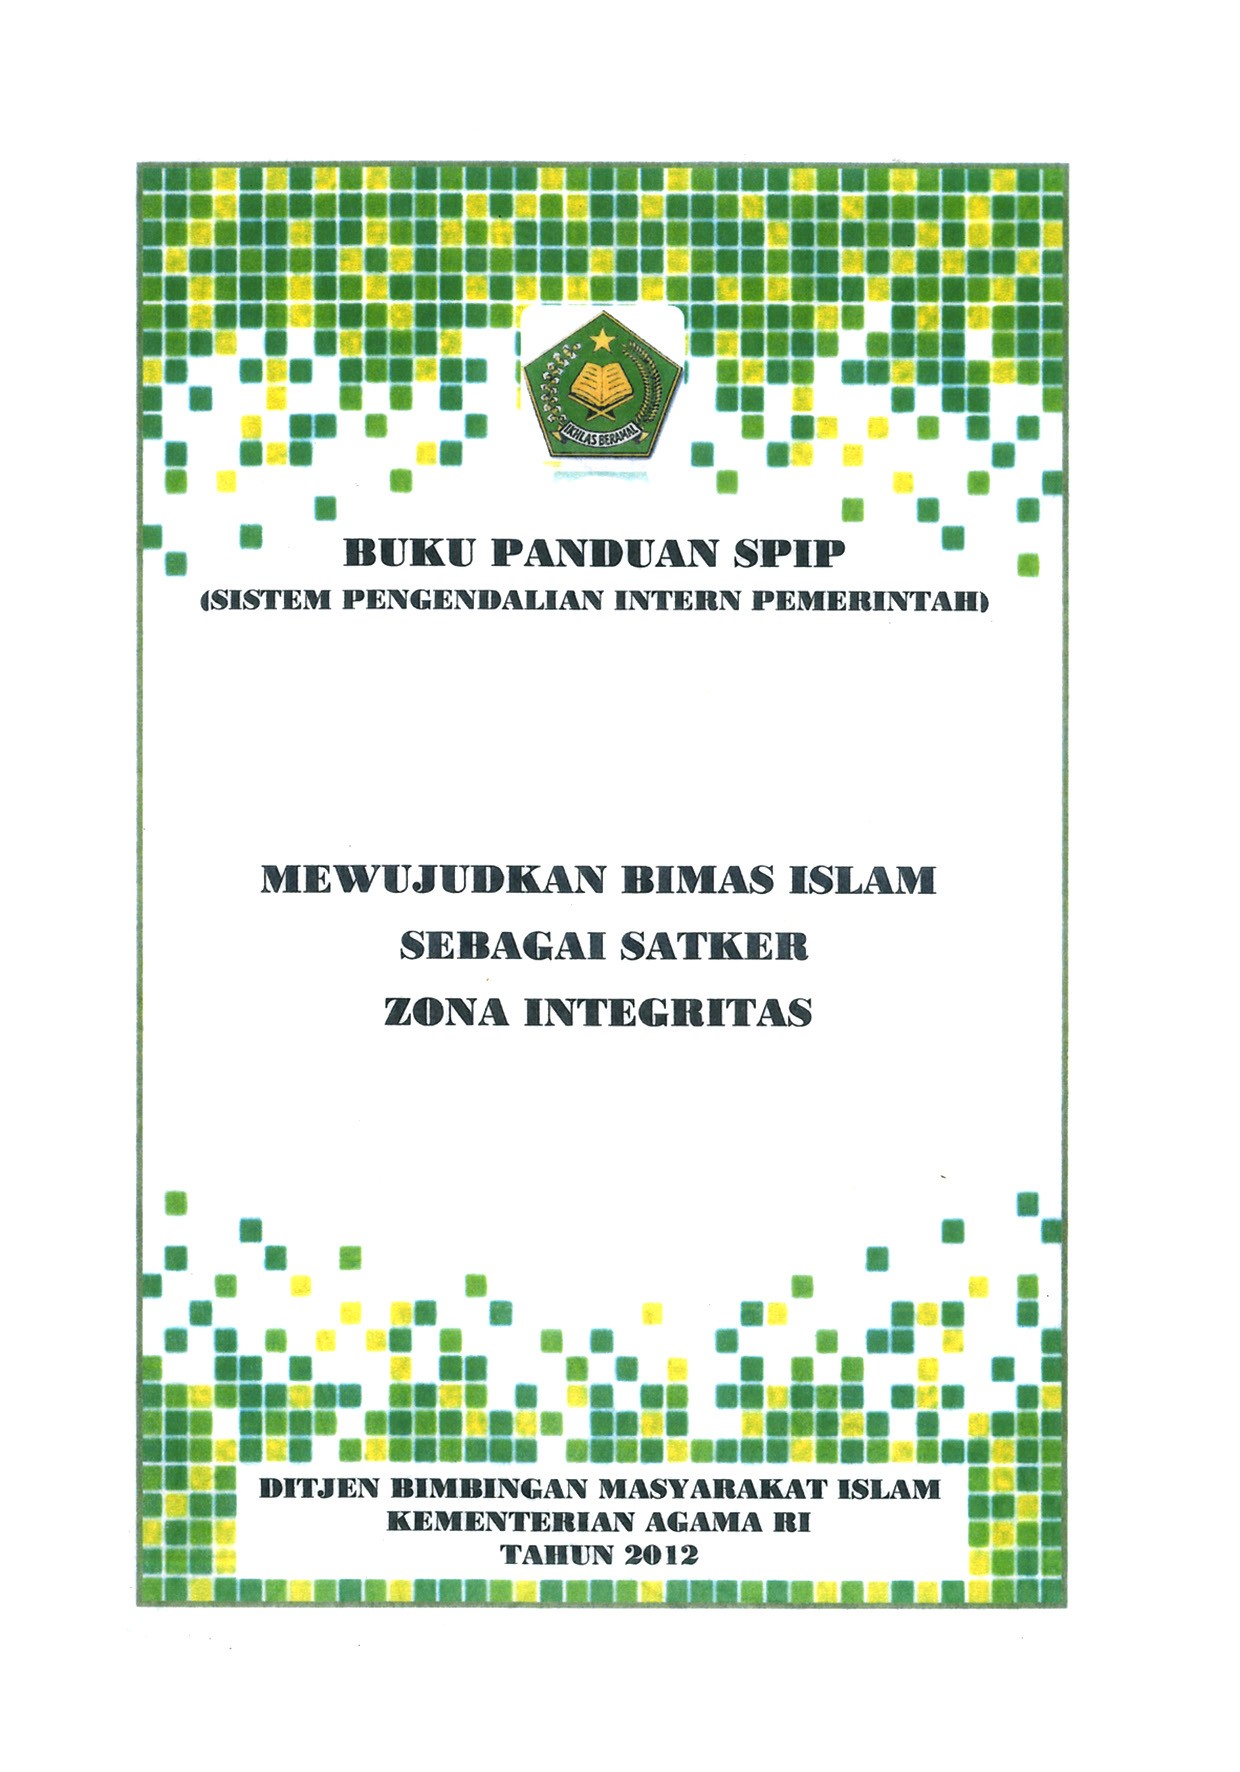 Buku Panduan SPIP (Sistem Pengendalian Intern Pemerintah) : Mewujudkan Bimas Islam Sebagai Satker Zona Integritas